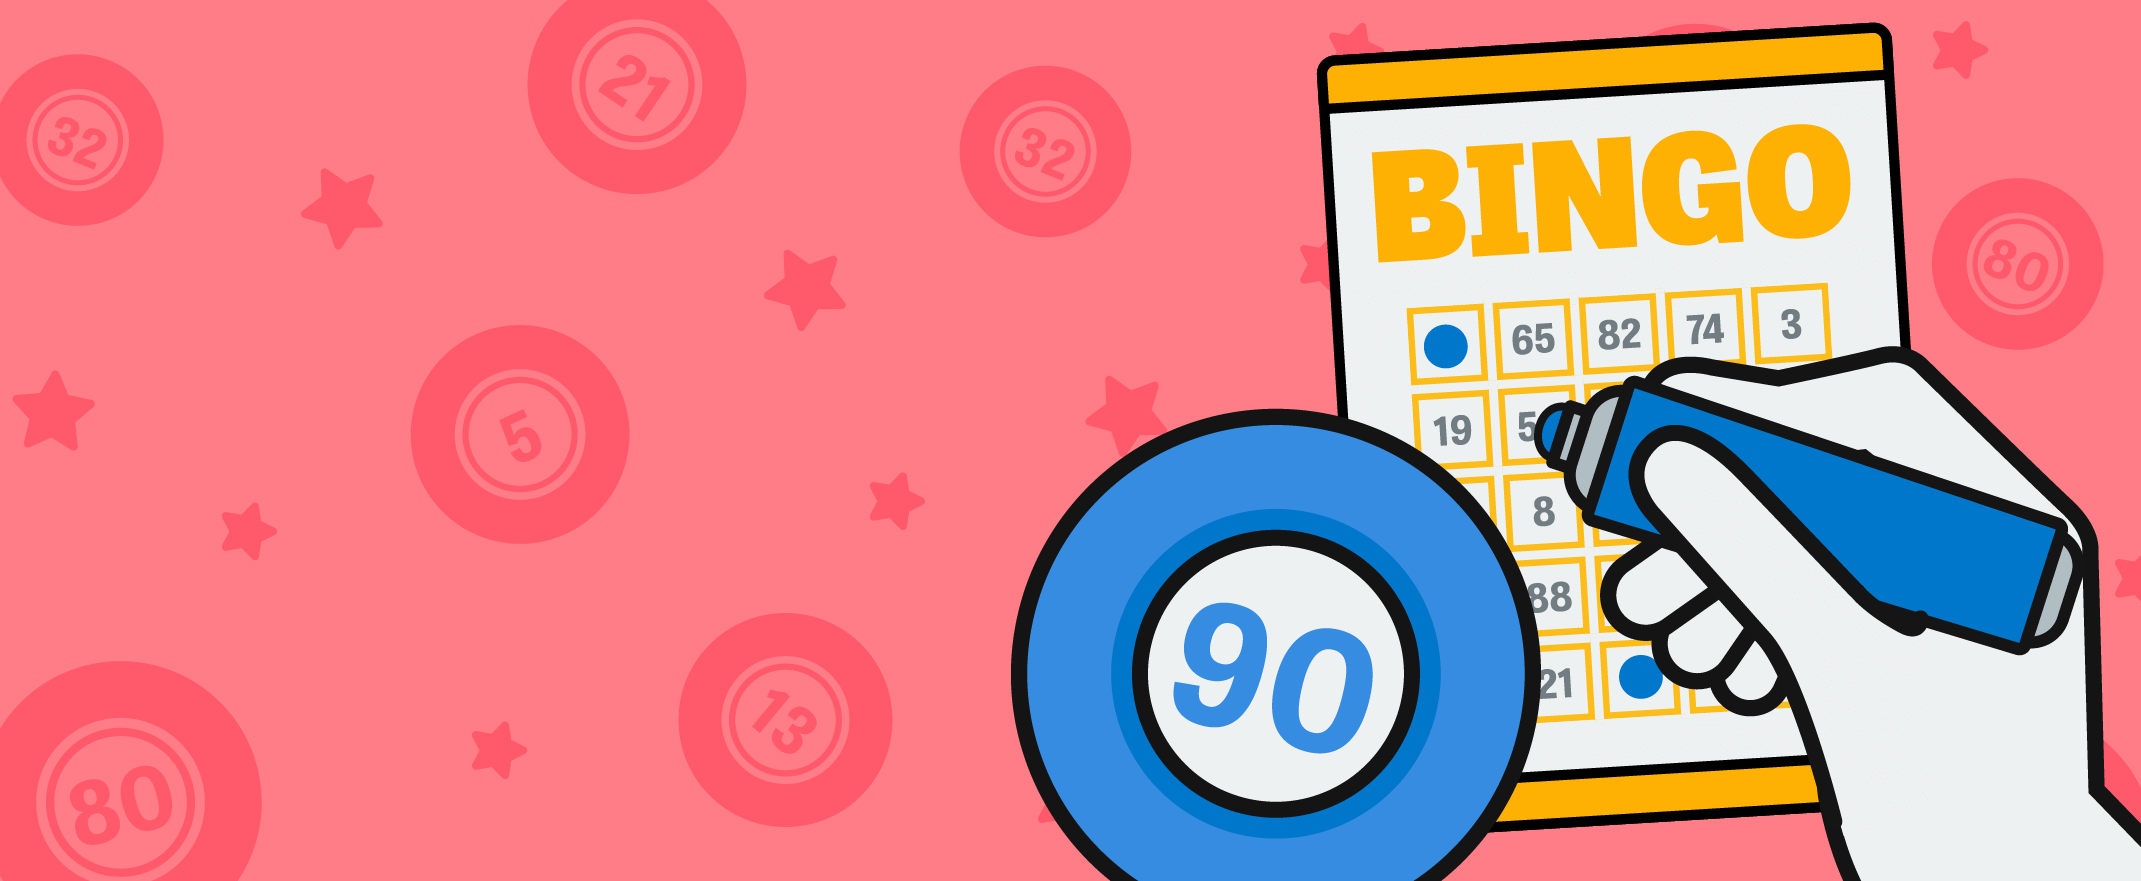 Popular bingo variants - 90 ball bingo